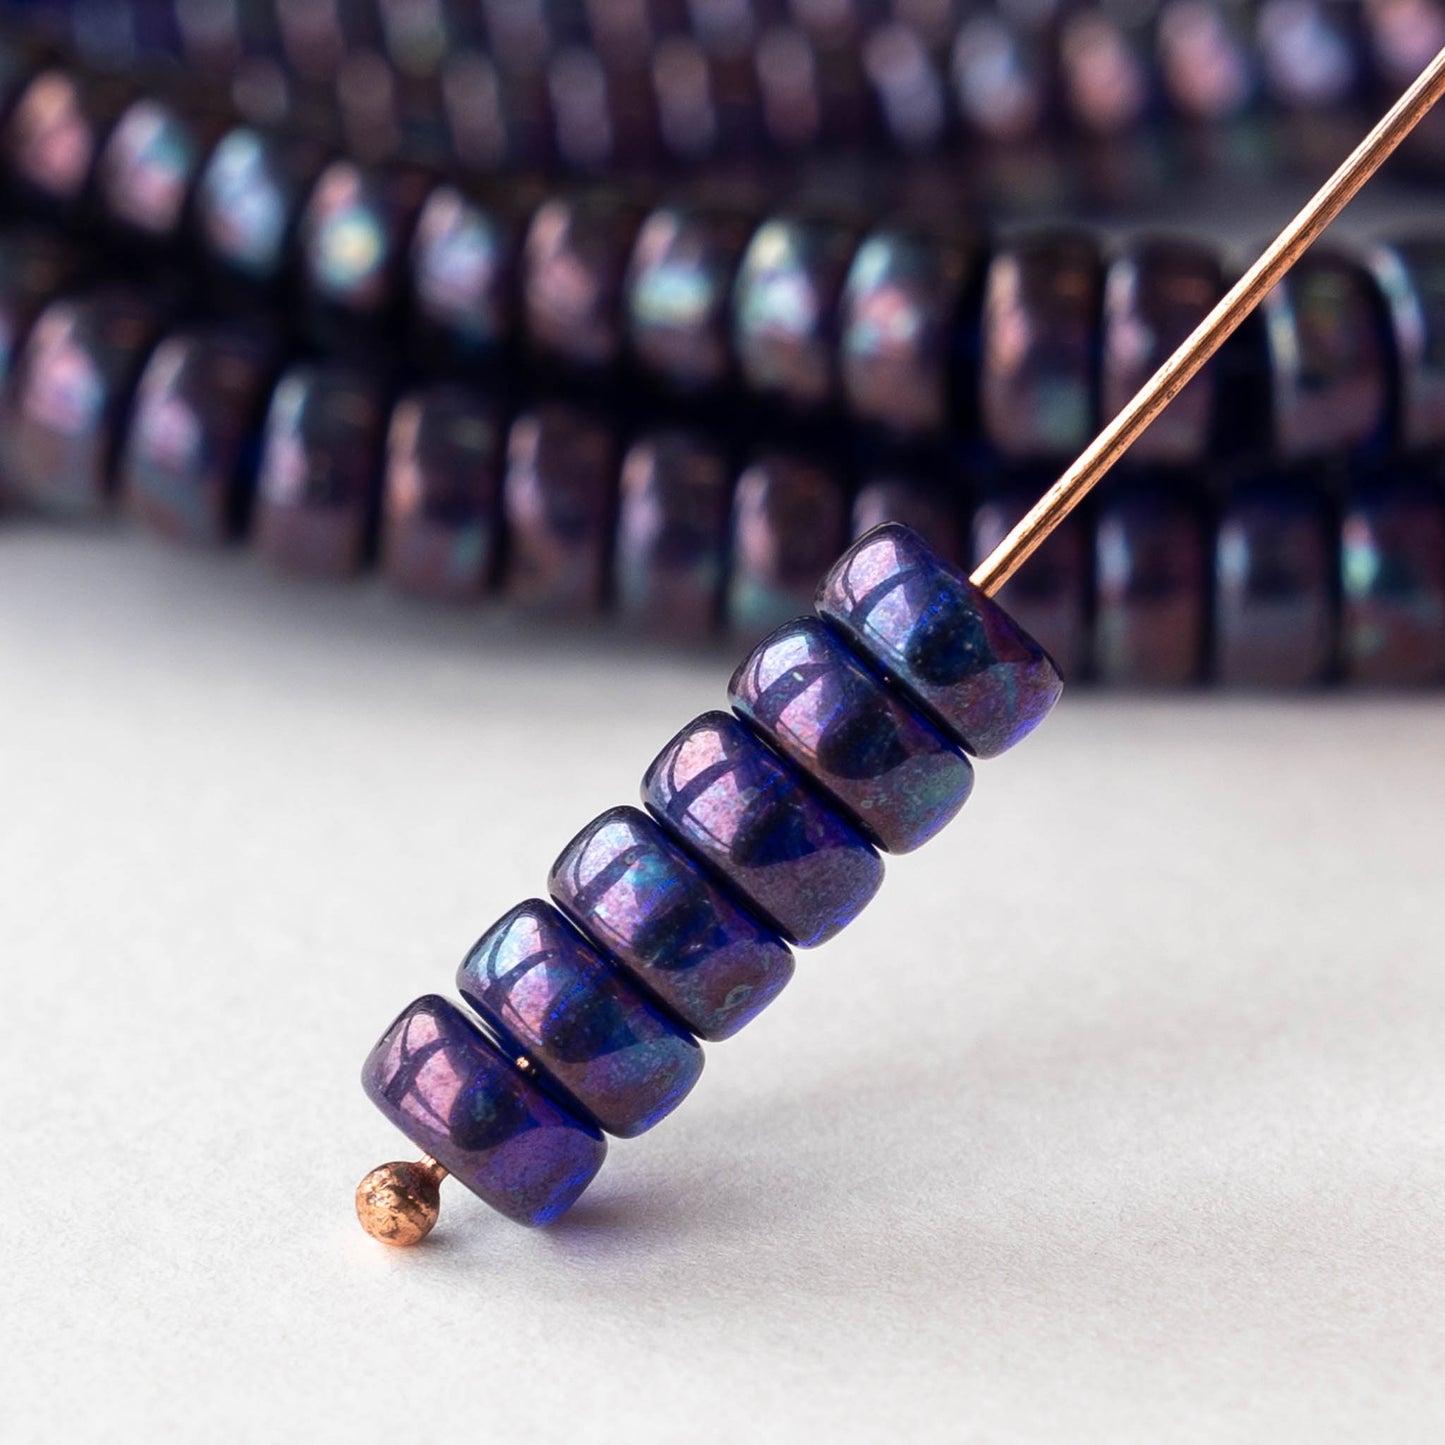 6mm Glass Heishi Beads - Purple Blue - 25 Beads